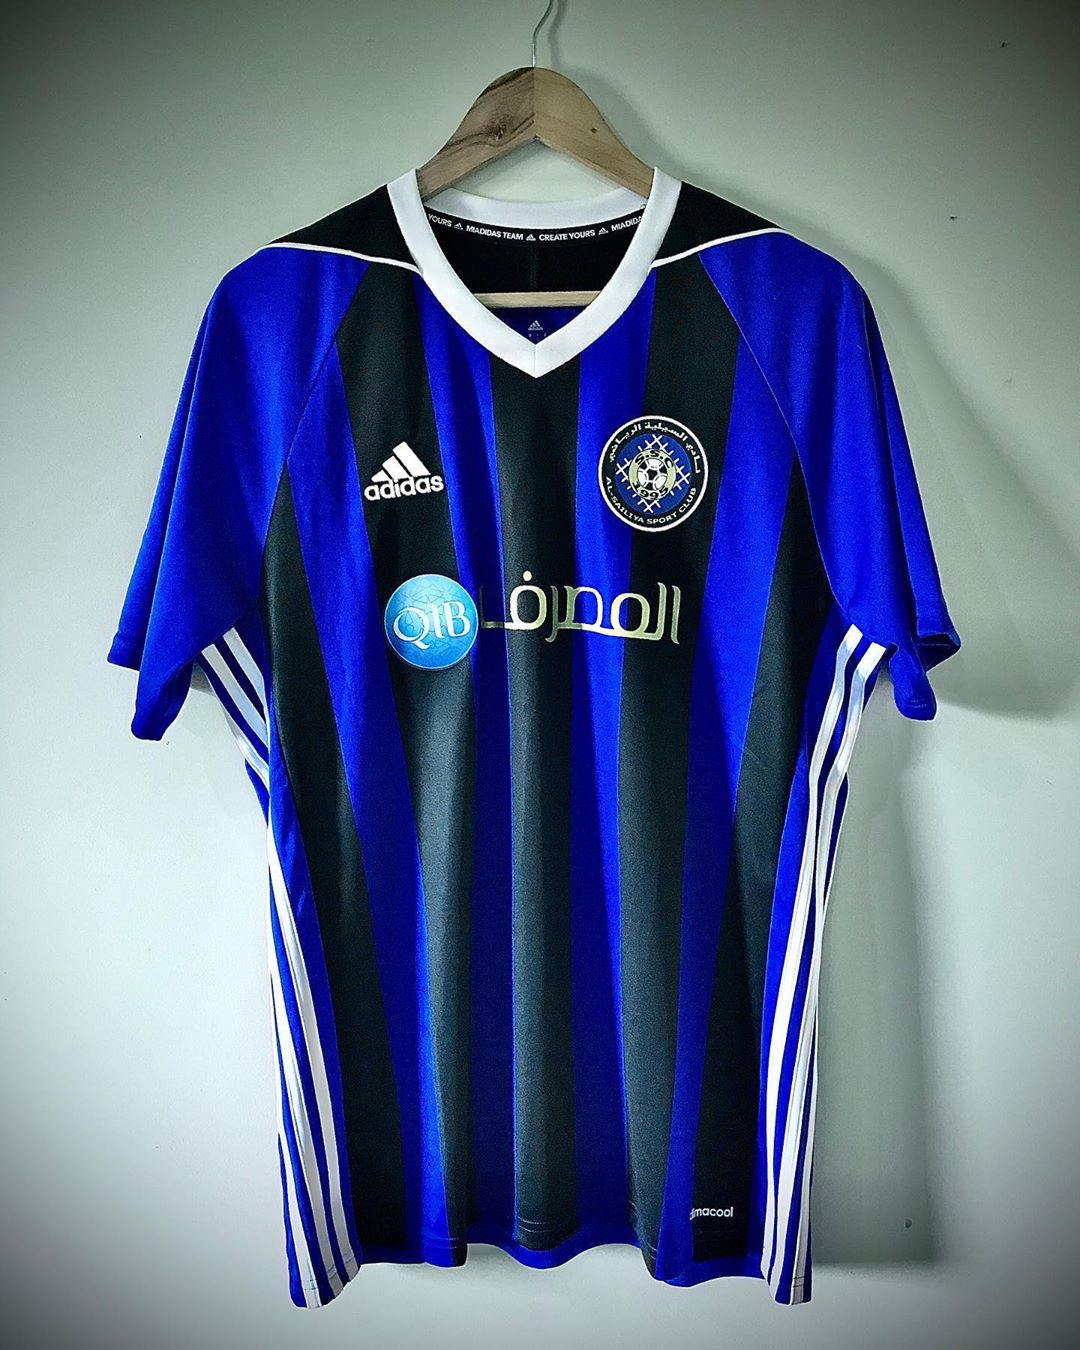 Al-Sailiya SC Home 2019/2020 Football Shirt Manufactured By Adidas. The club plays football in Qatar.